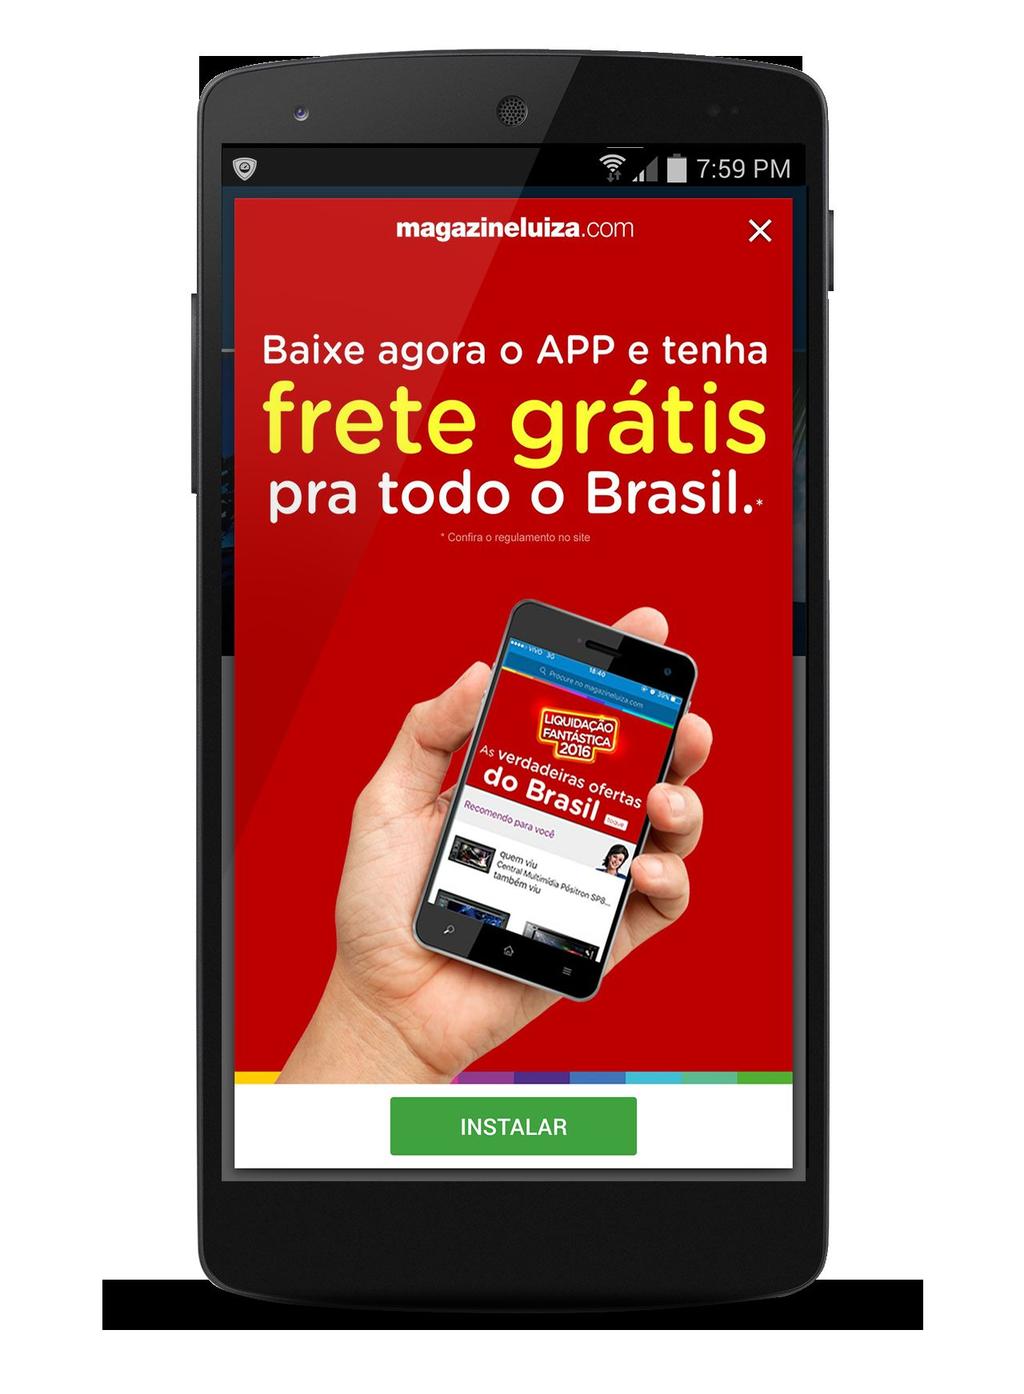 MAGAZINE LUIZA Campaign goal: installation of the app.